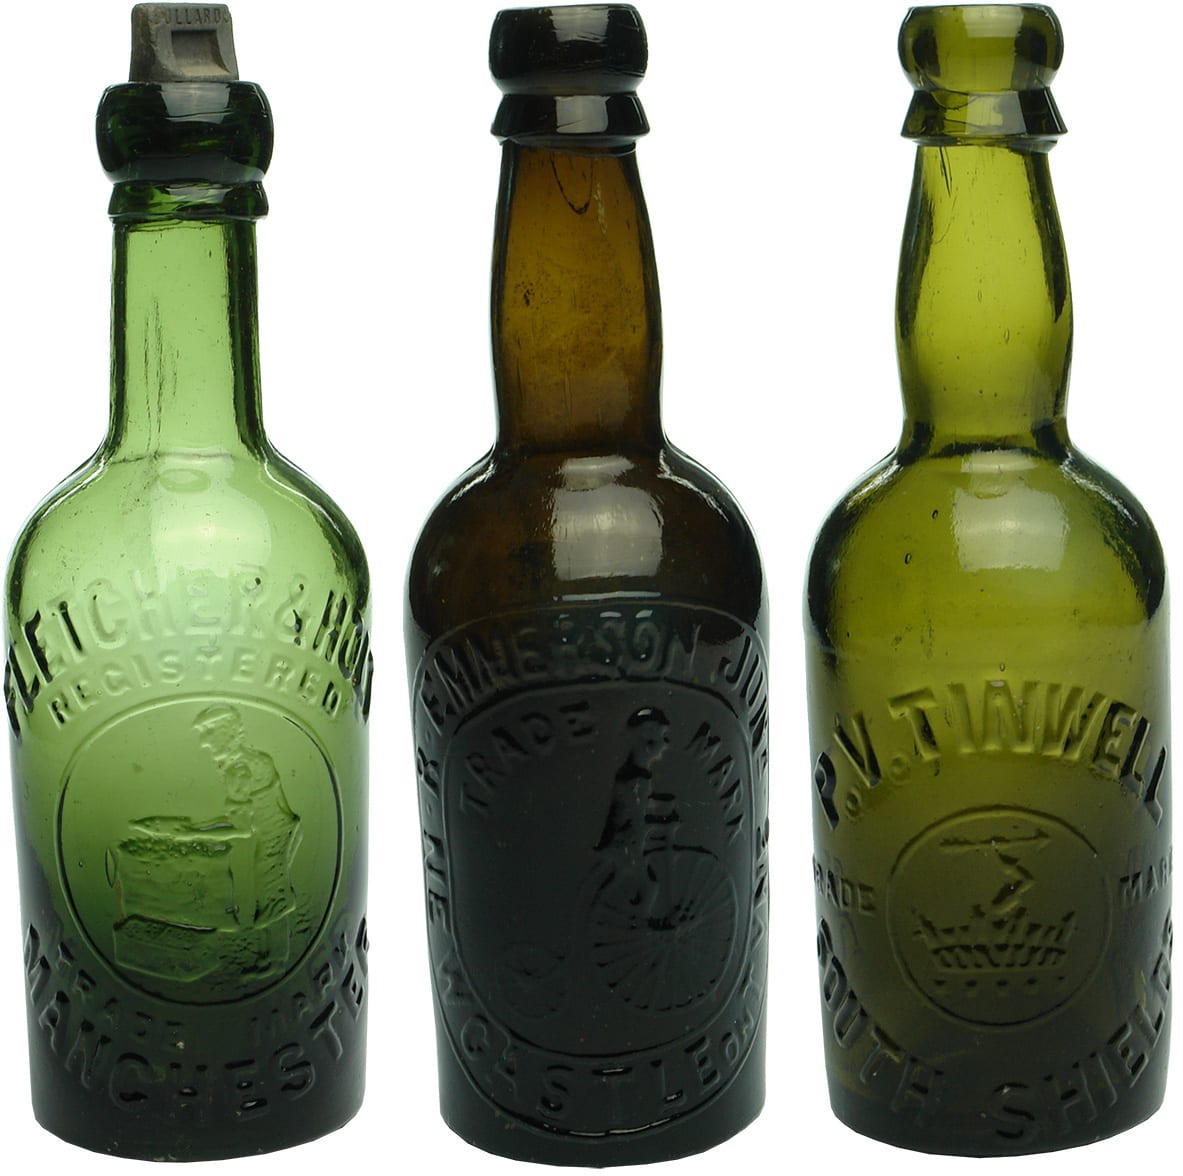 Antique English Glass Beer Bottles